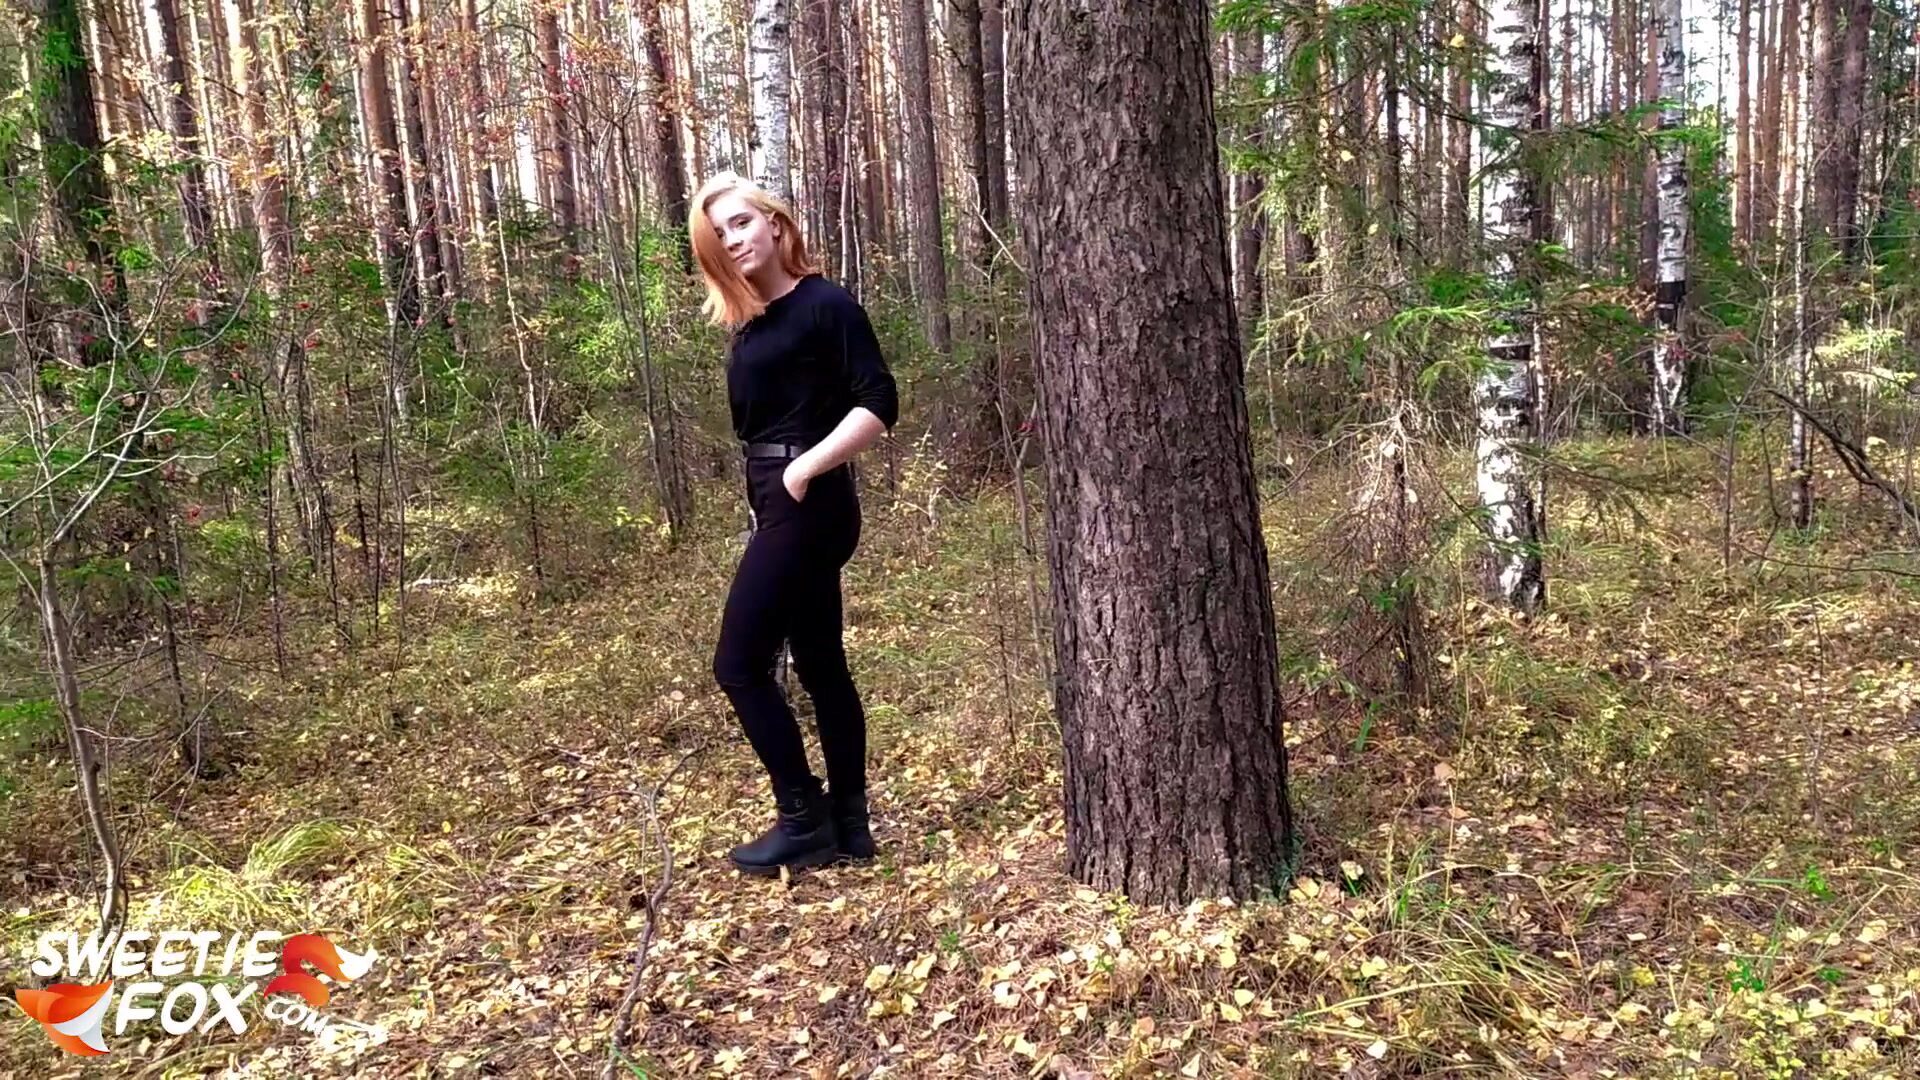 garota ruiva sugada e fodida com força na floresta